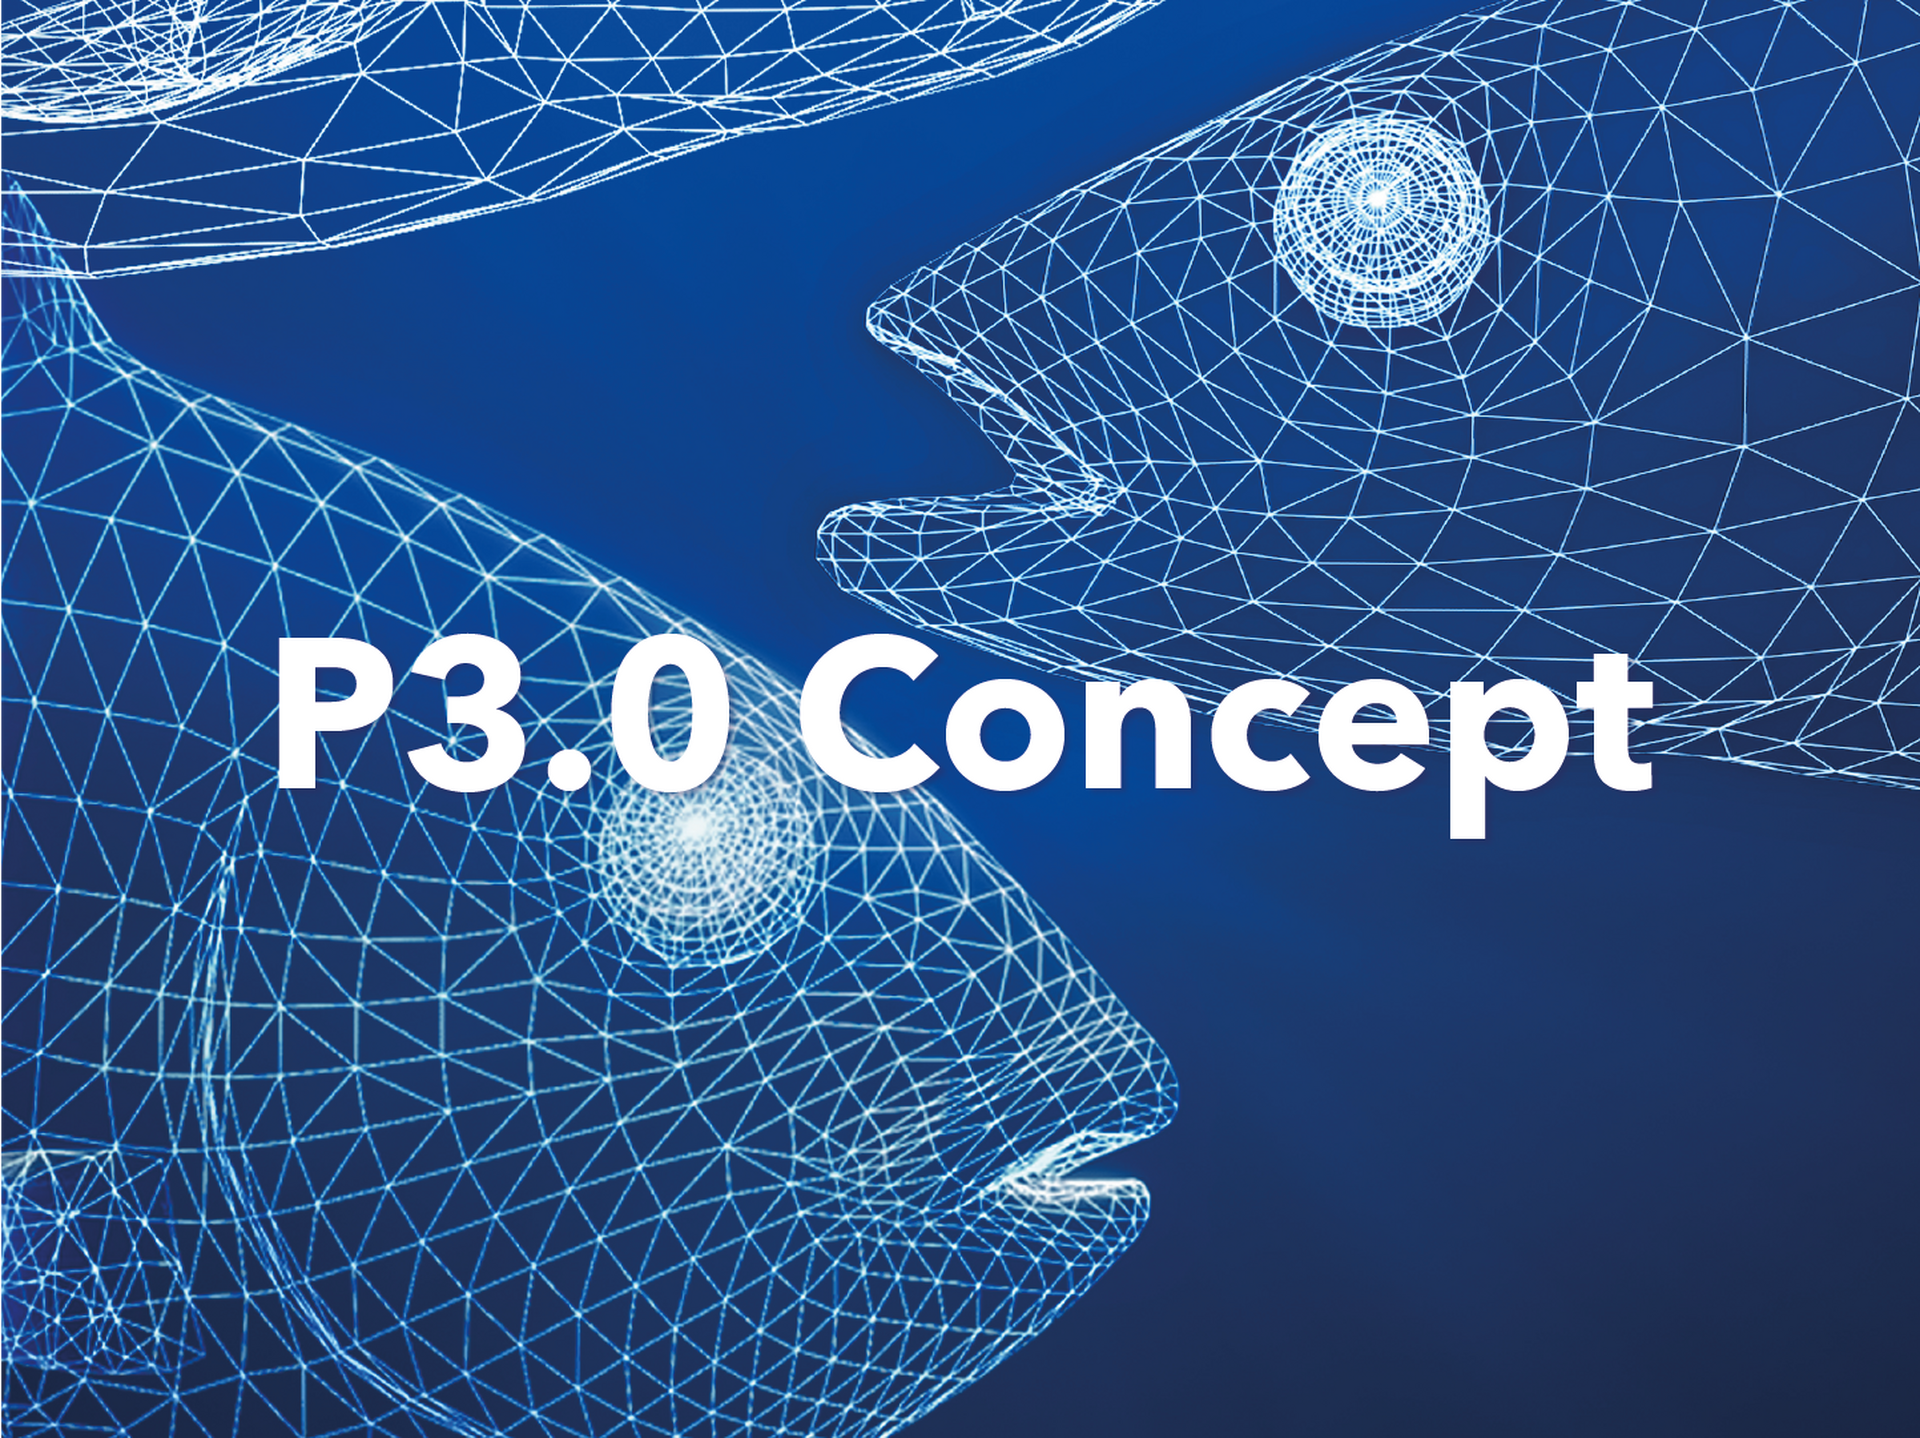 P 3.0 Concept